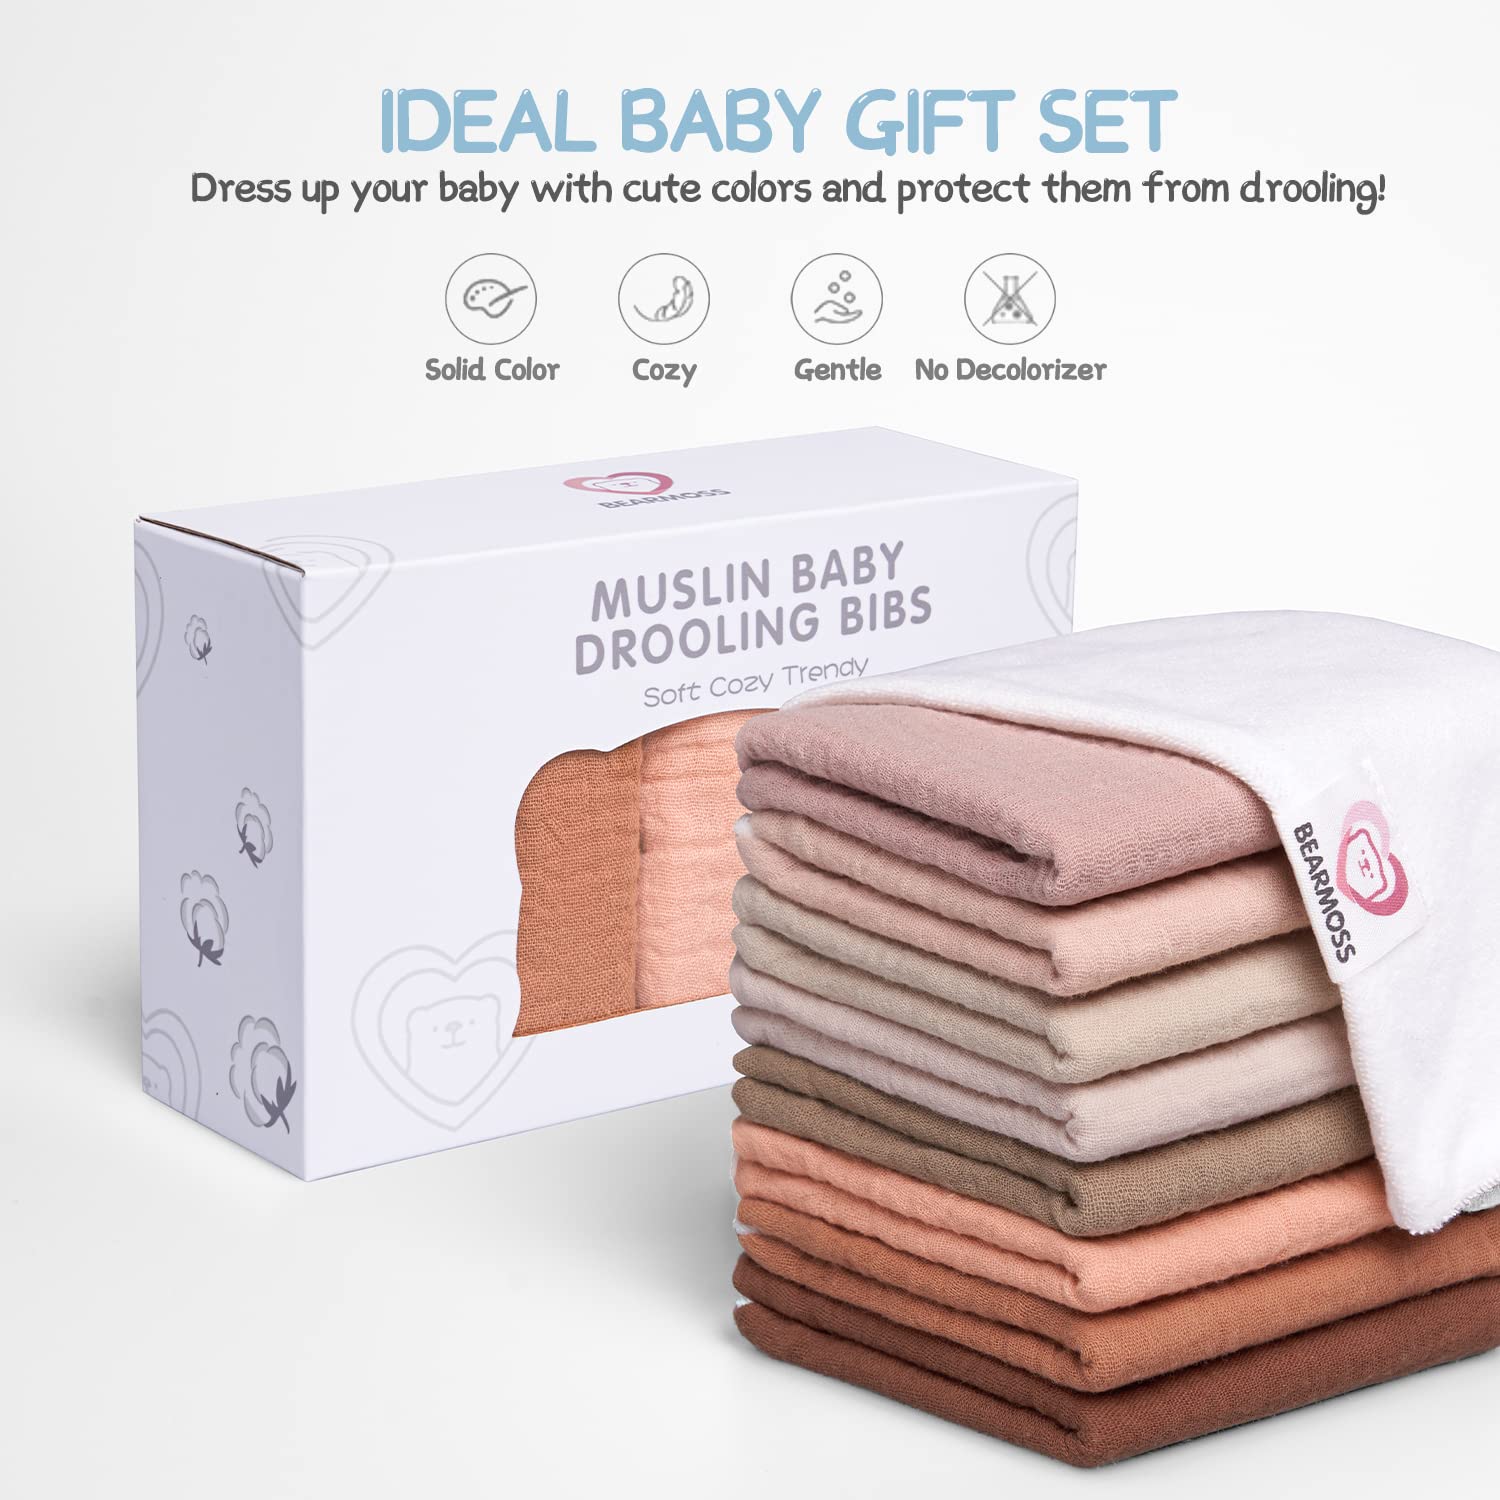 Bearmoss Muslin Baby Drooling Bibs 8 Pack, 100% Cotton Square Adjustable Bandana Bibs Gift for Baby Girls Boys Teething Drool (Coconut Mocha)